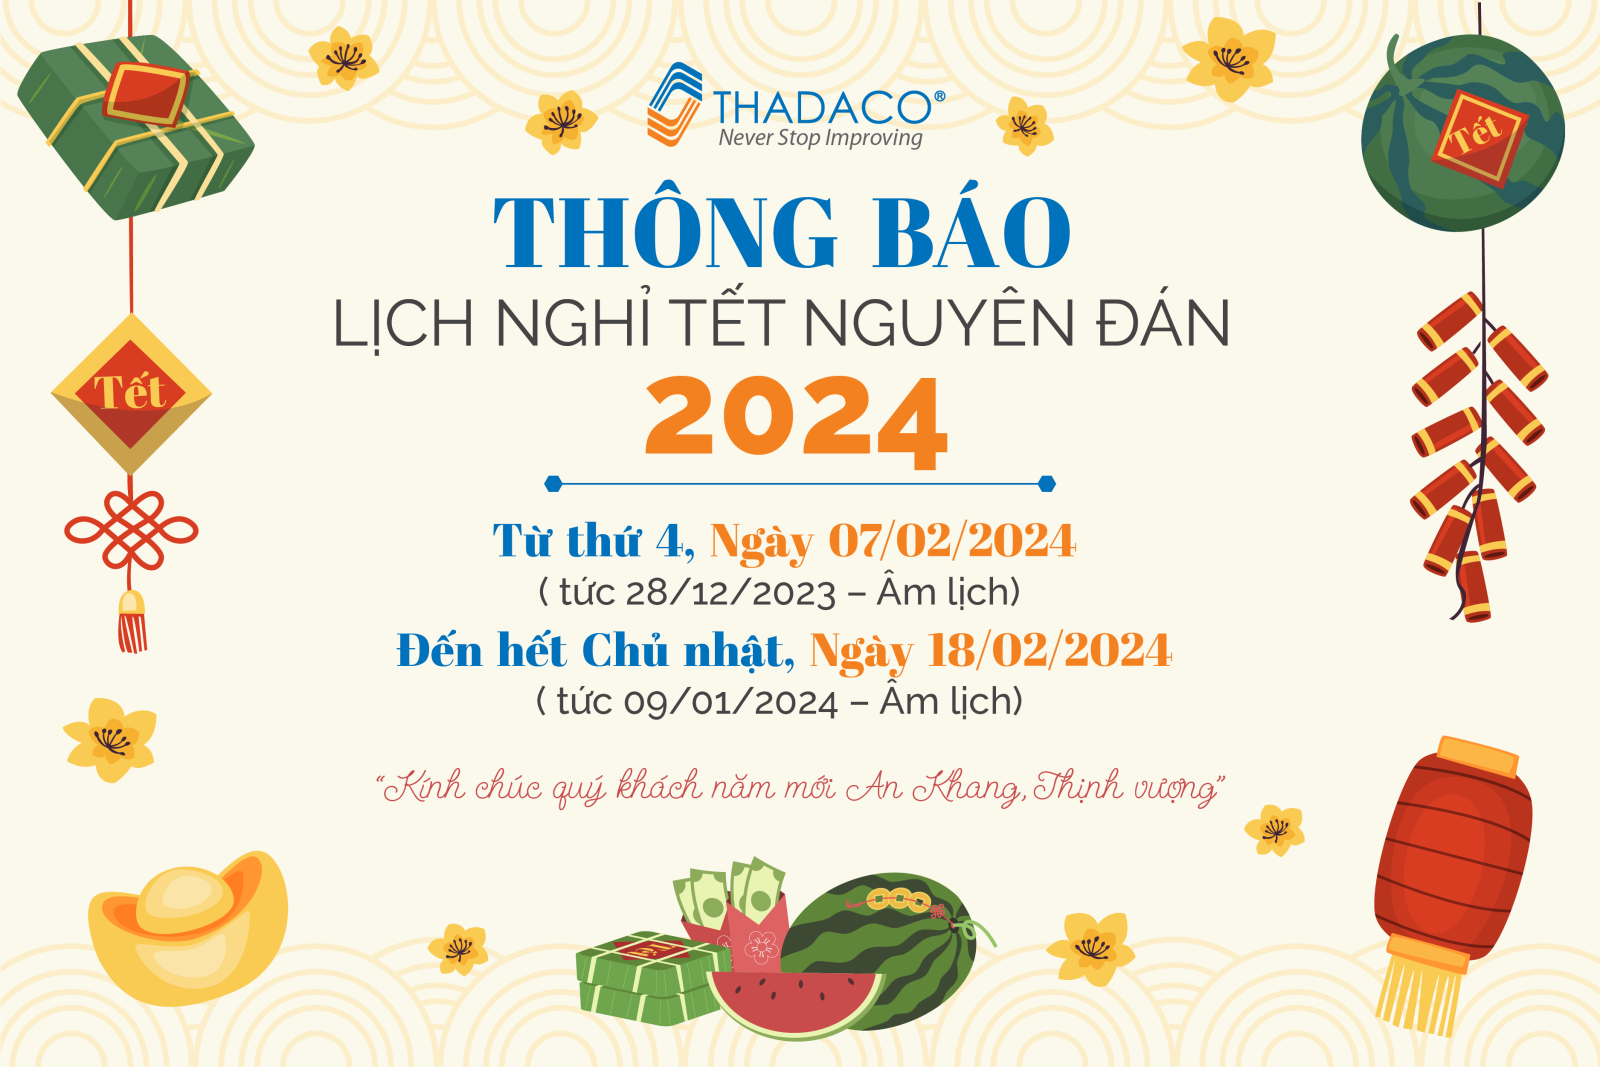 thadaco-thong-bao-nghi-tet-2024